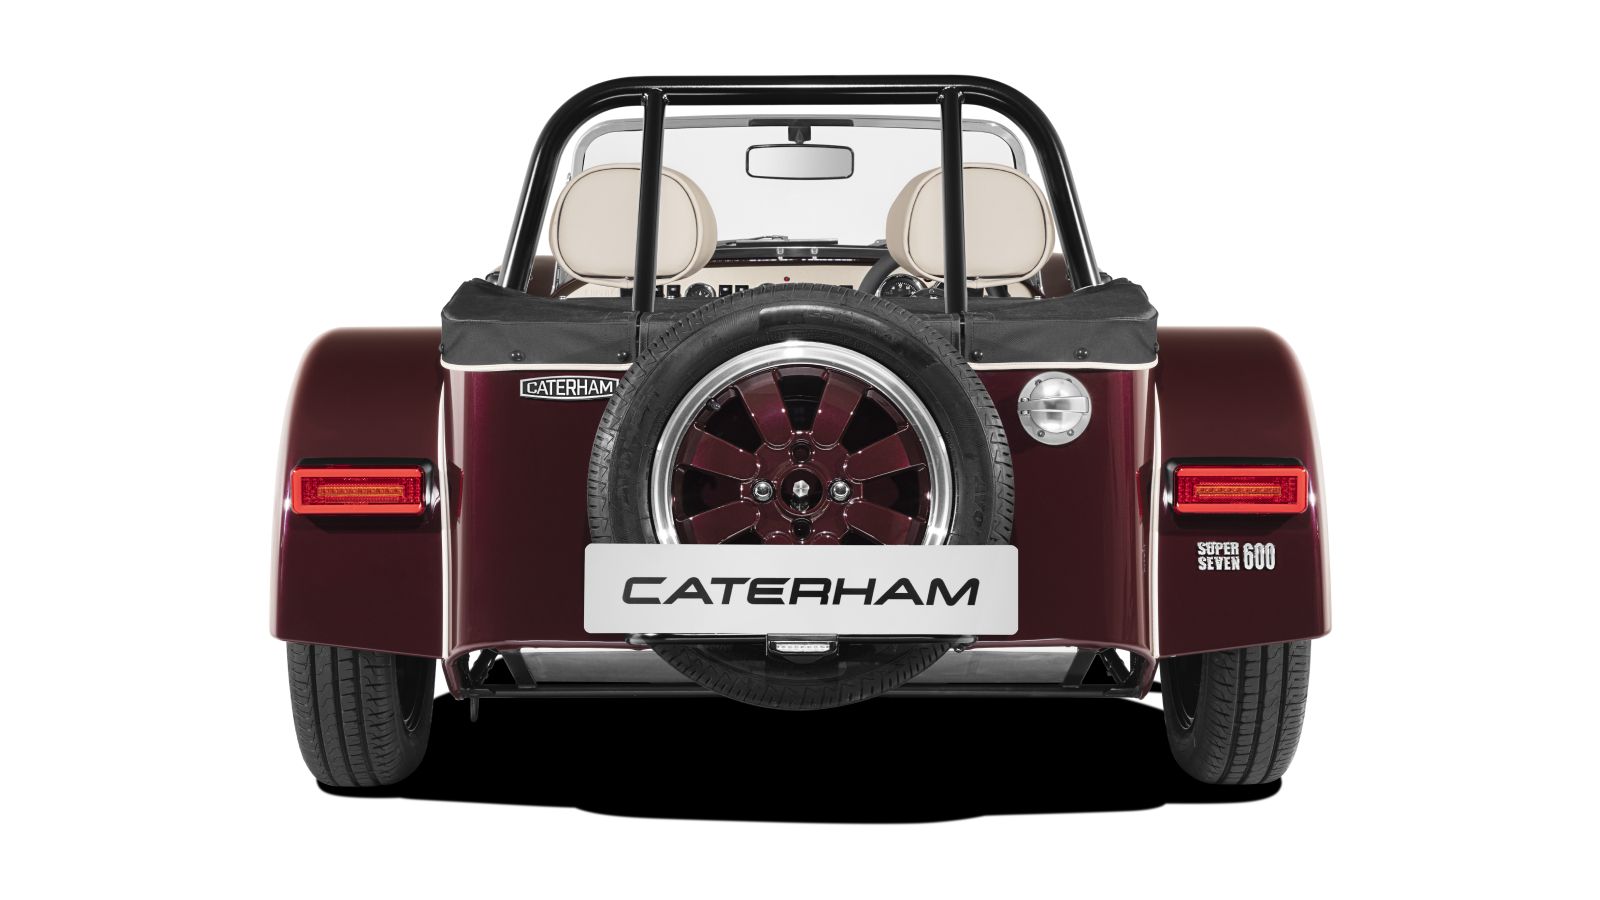 Caterham Super Seven 600 rear